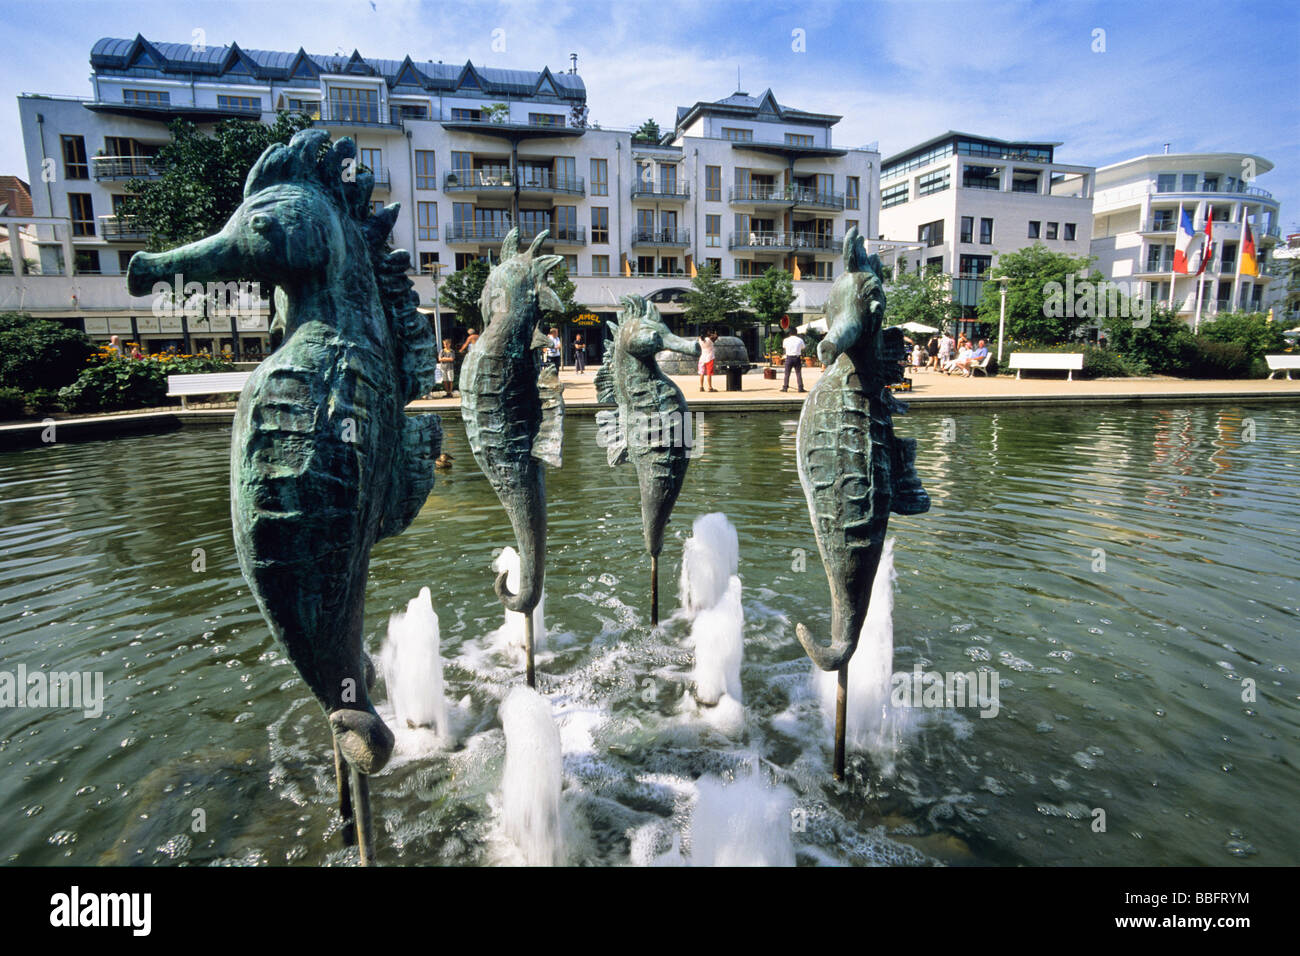 Seepferdchenbrunnen seahorse fountain, Timmendorfer Strand, Luebeck Bay, Baltic Sea, Germany, Europe Stock Photo